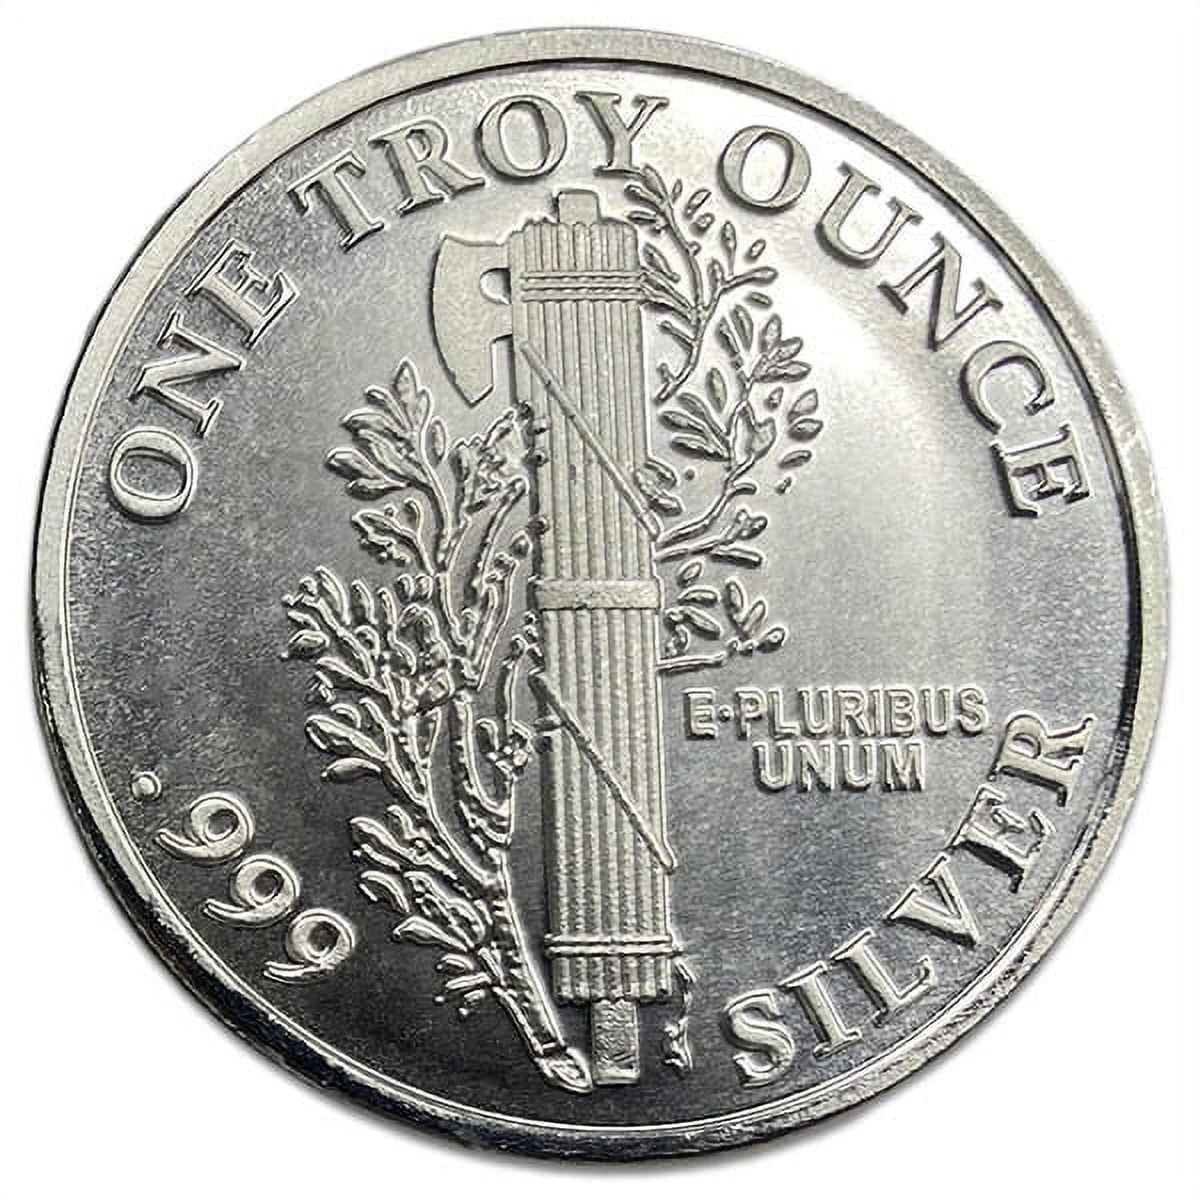  1 Troy Ounce Silver